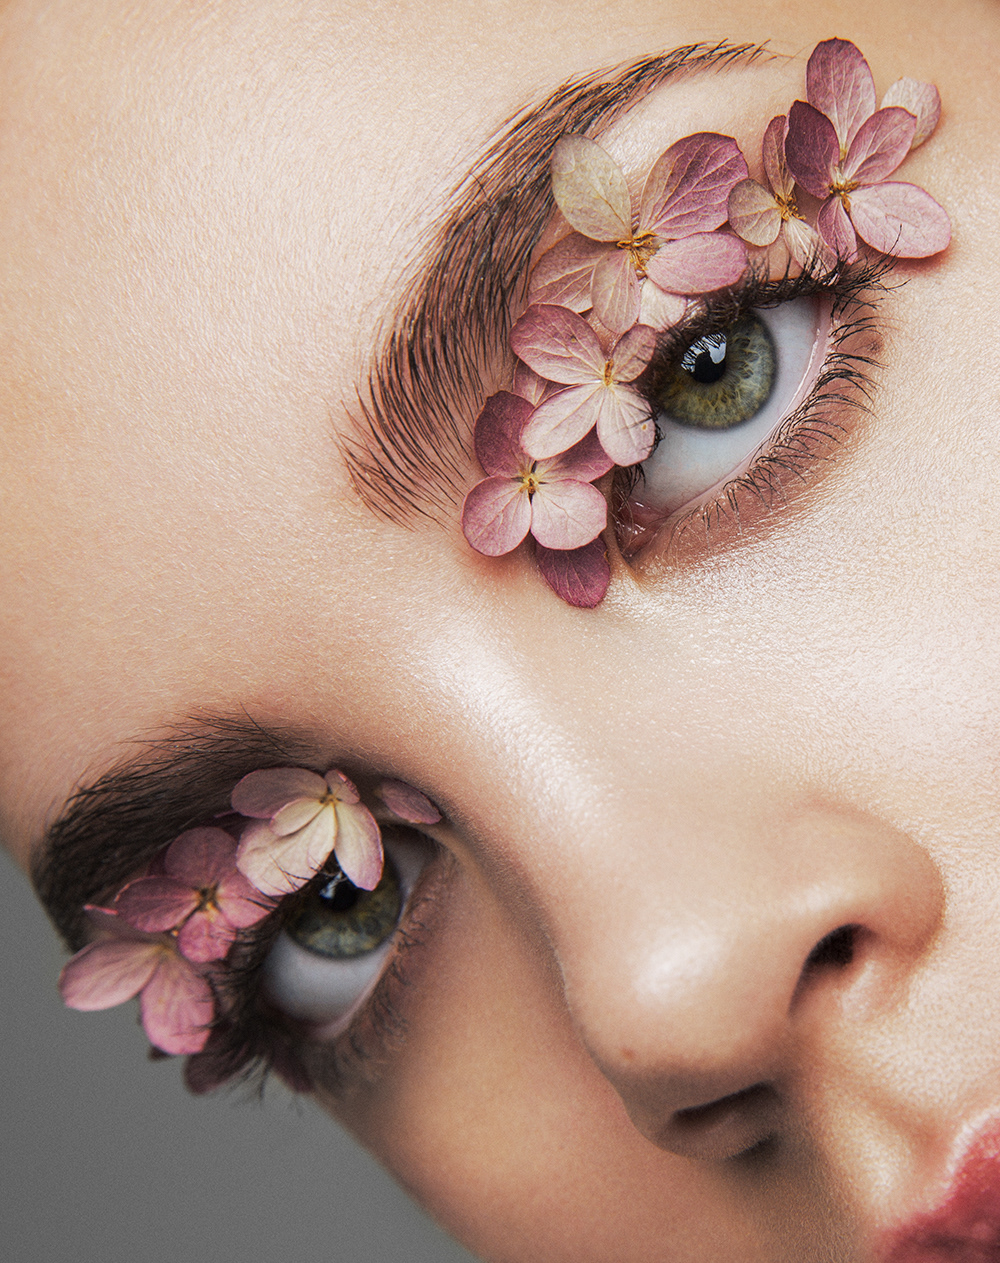 Floral eye makeup